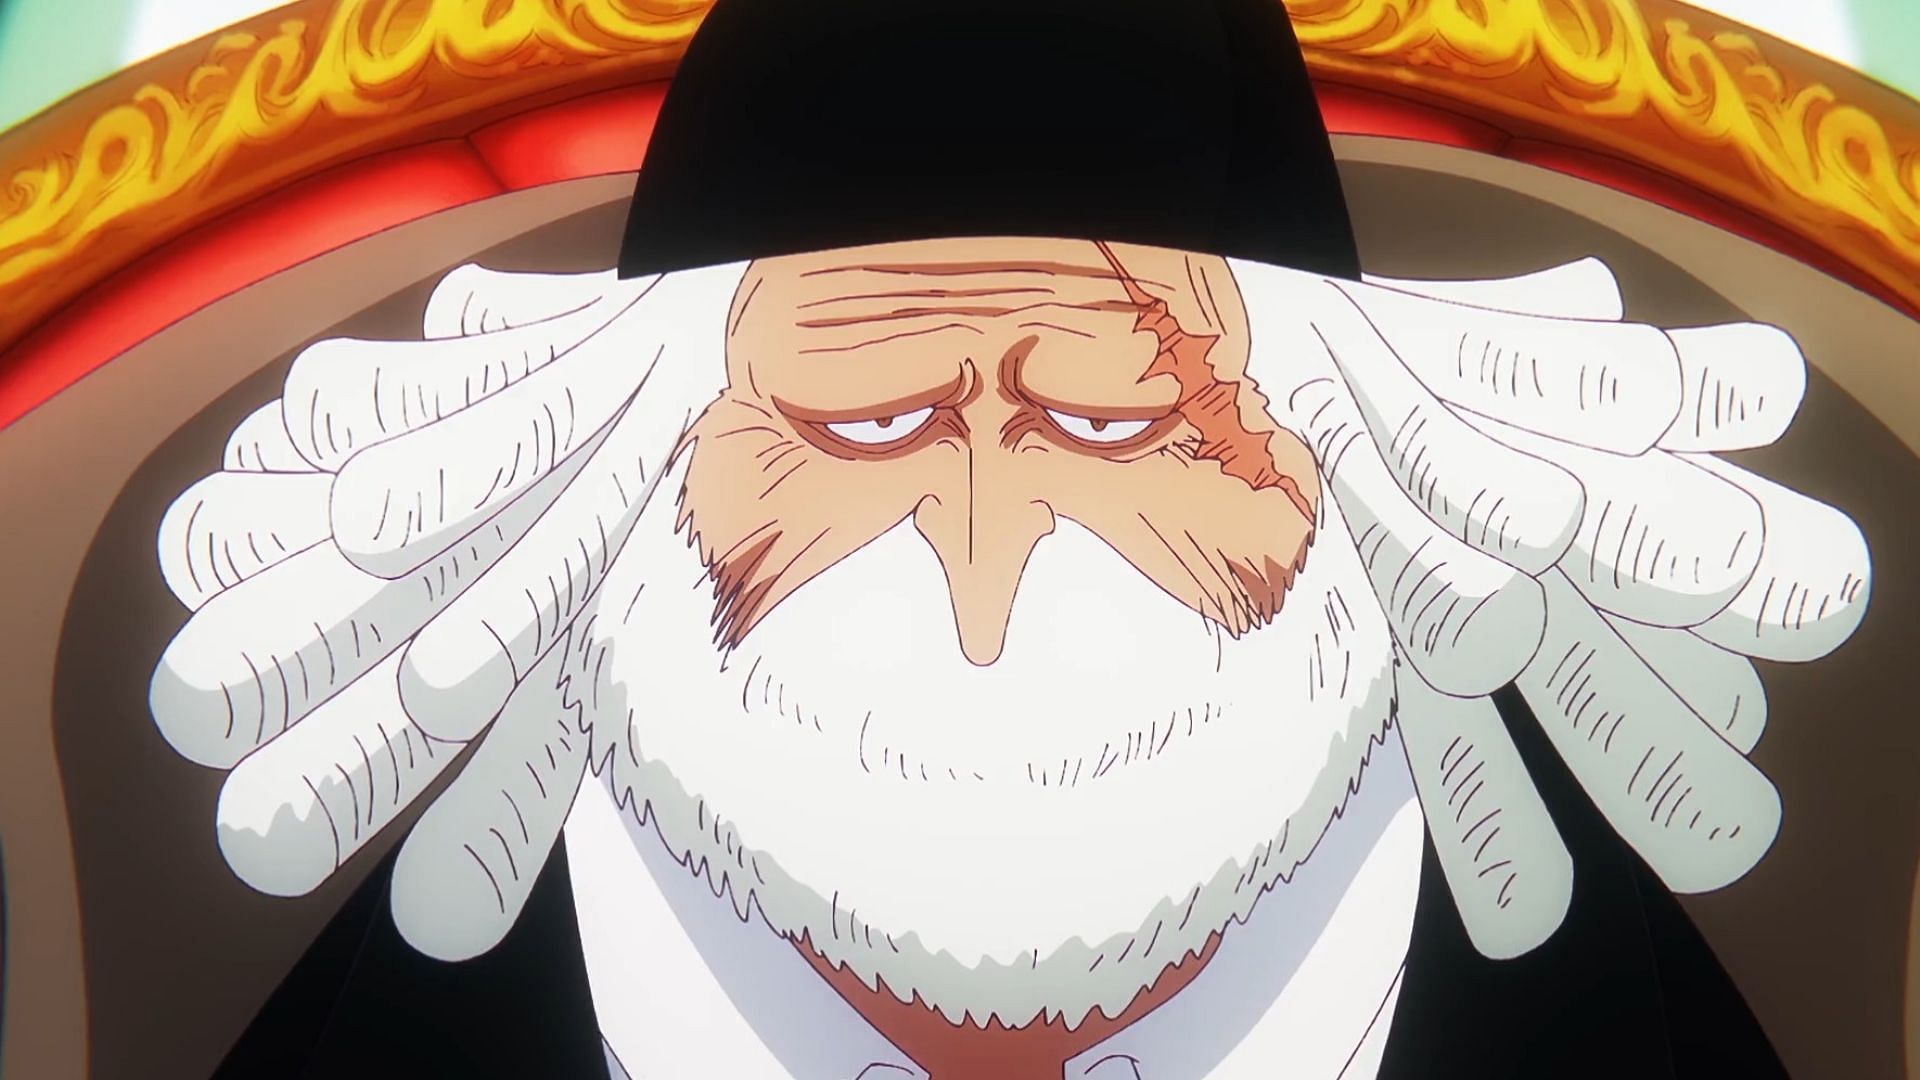 St Jaygarcia Saturn as seen in One Piece anime (Image via Toei Animation)